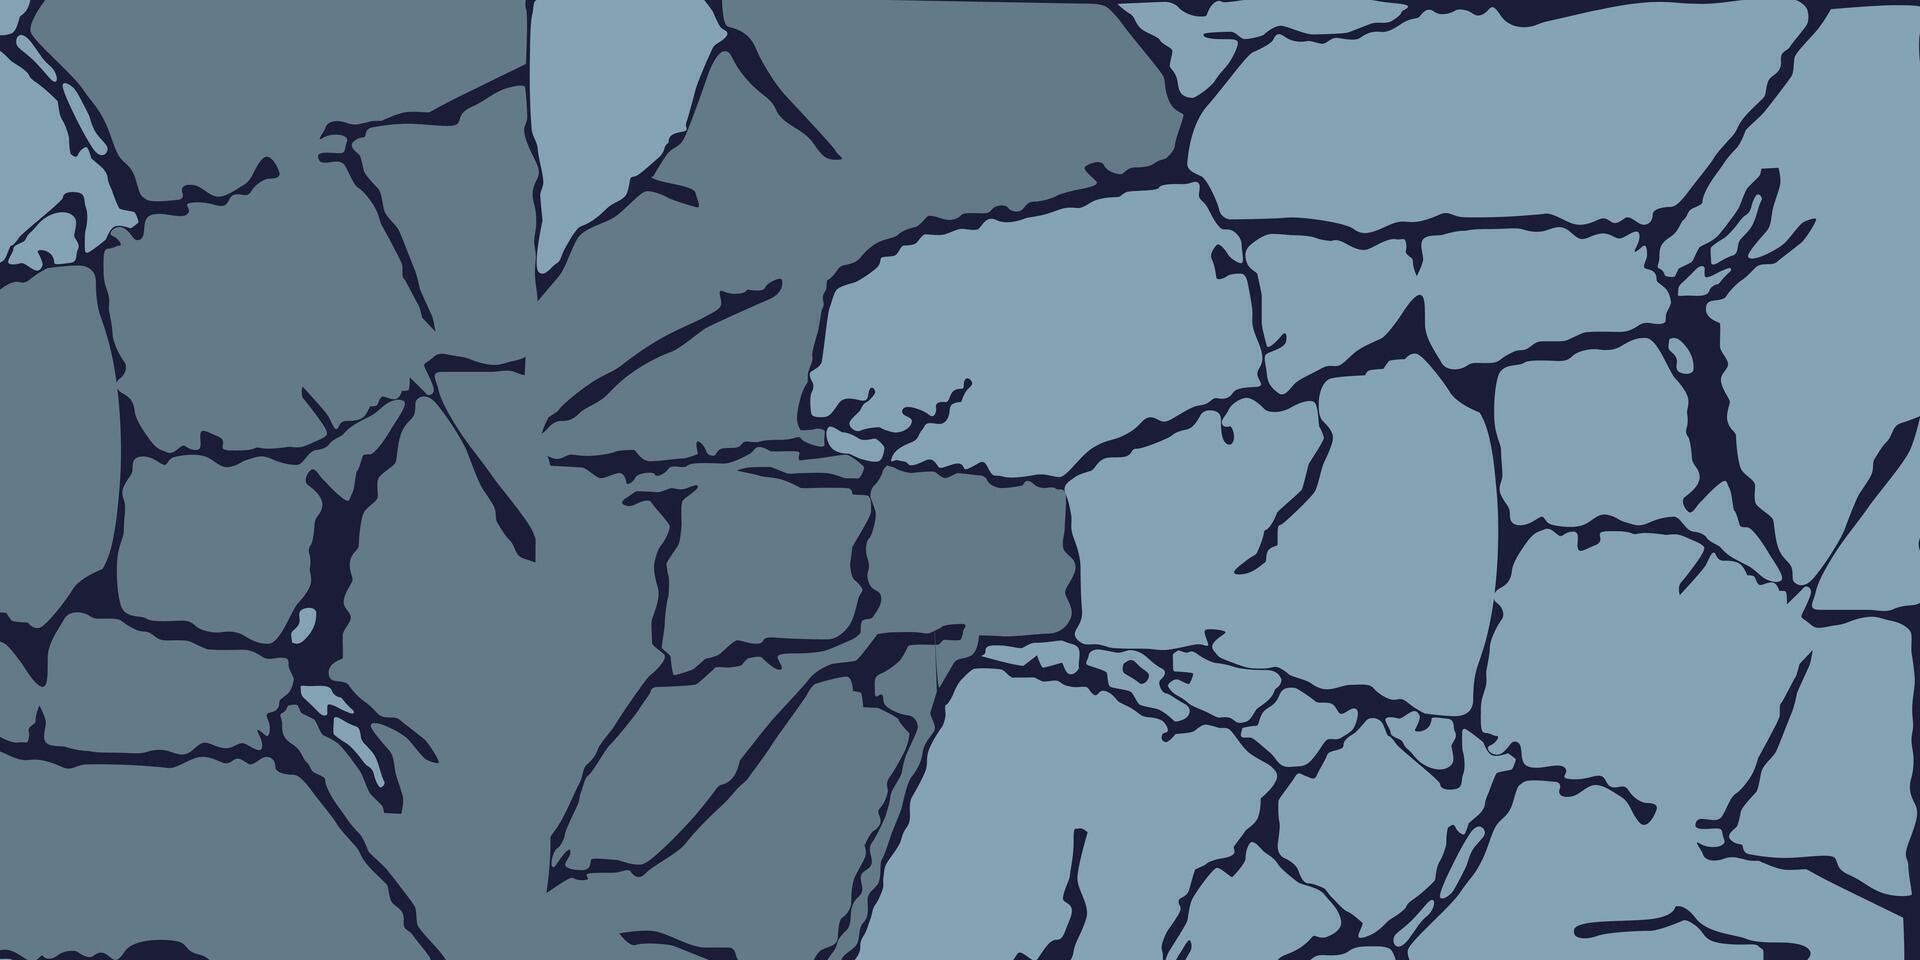 Tile cracked wall vector for background design element